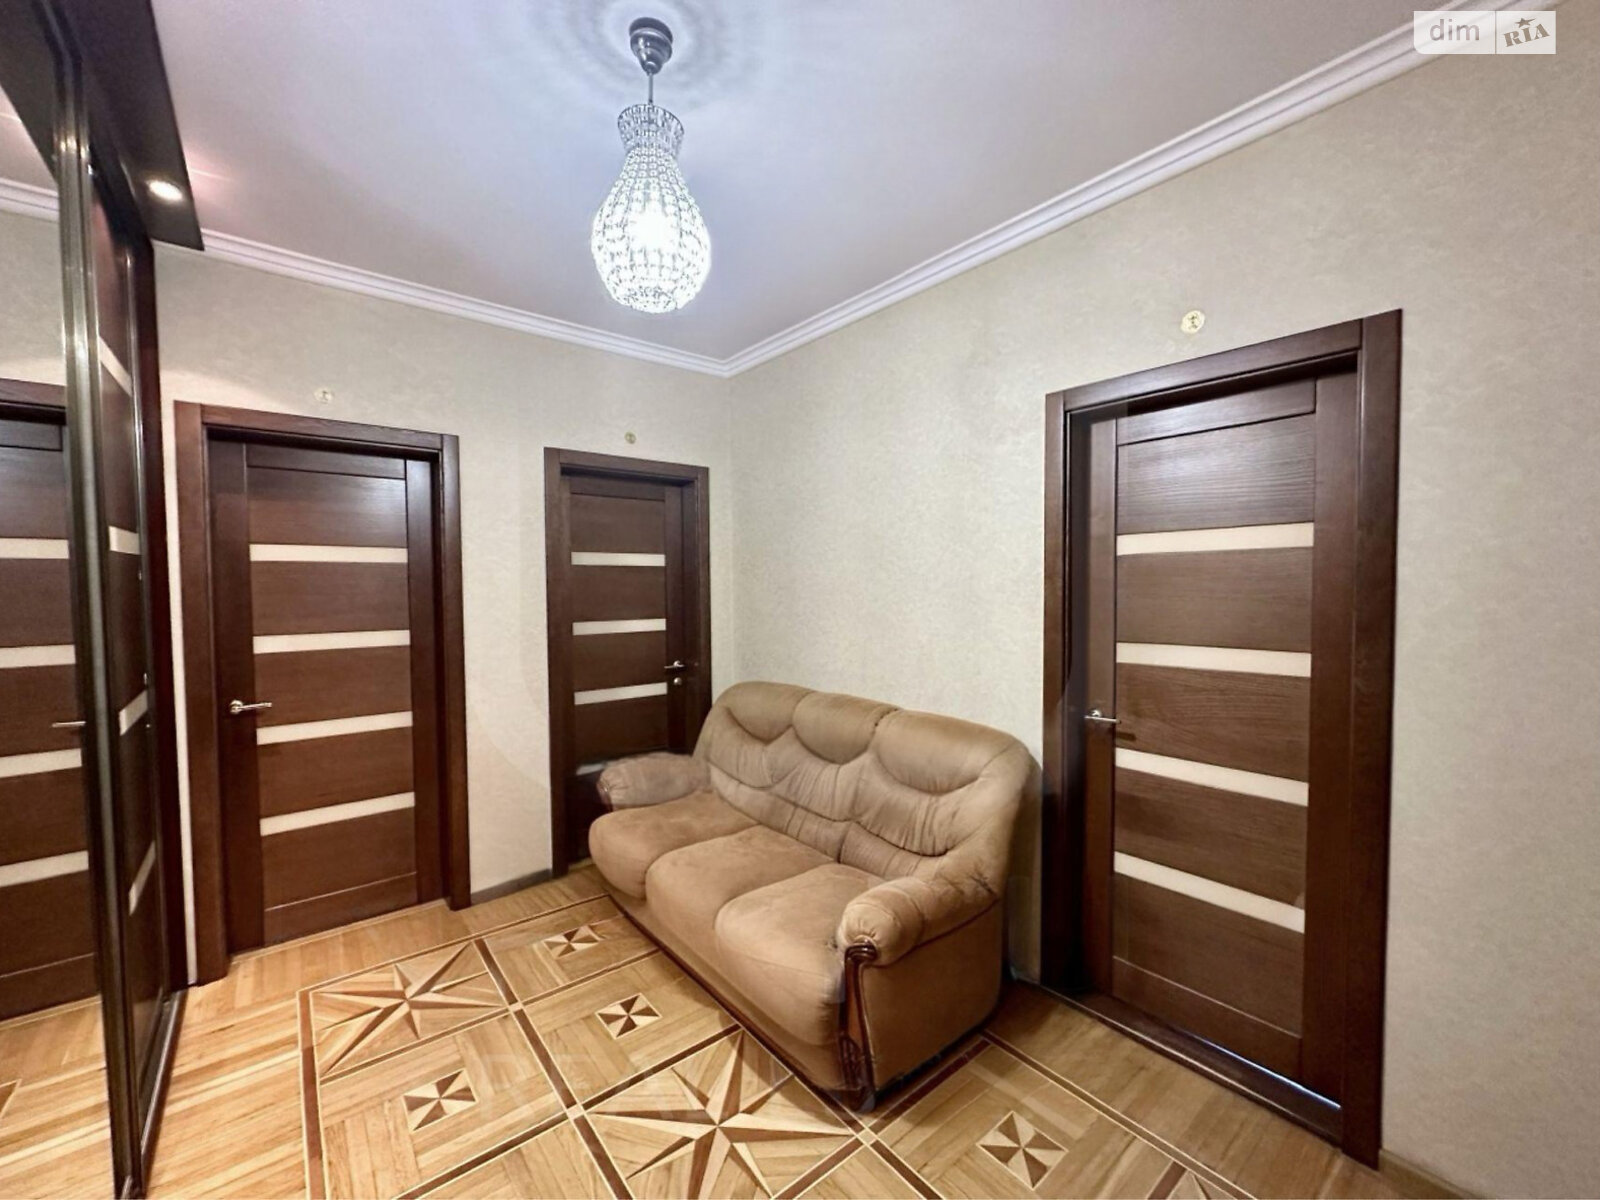 Продажа трехкомнатной квартиры в Харькове, на просп. Науки 28, район Шатиловка фото 1